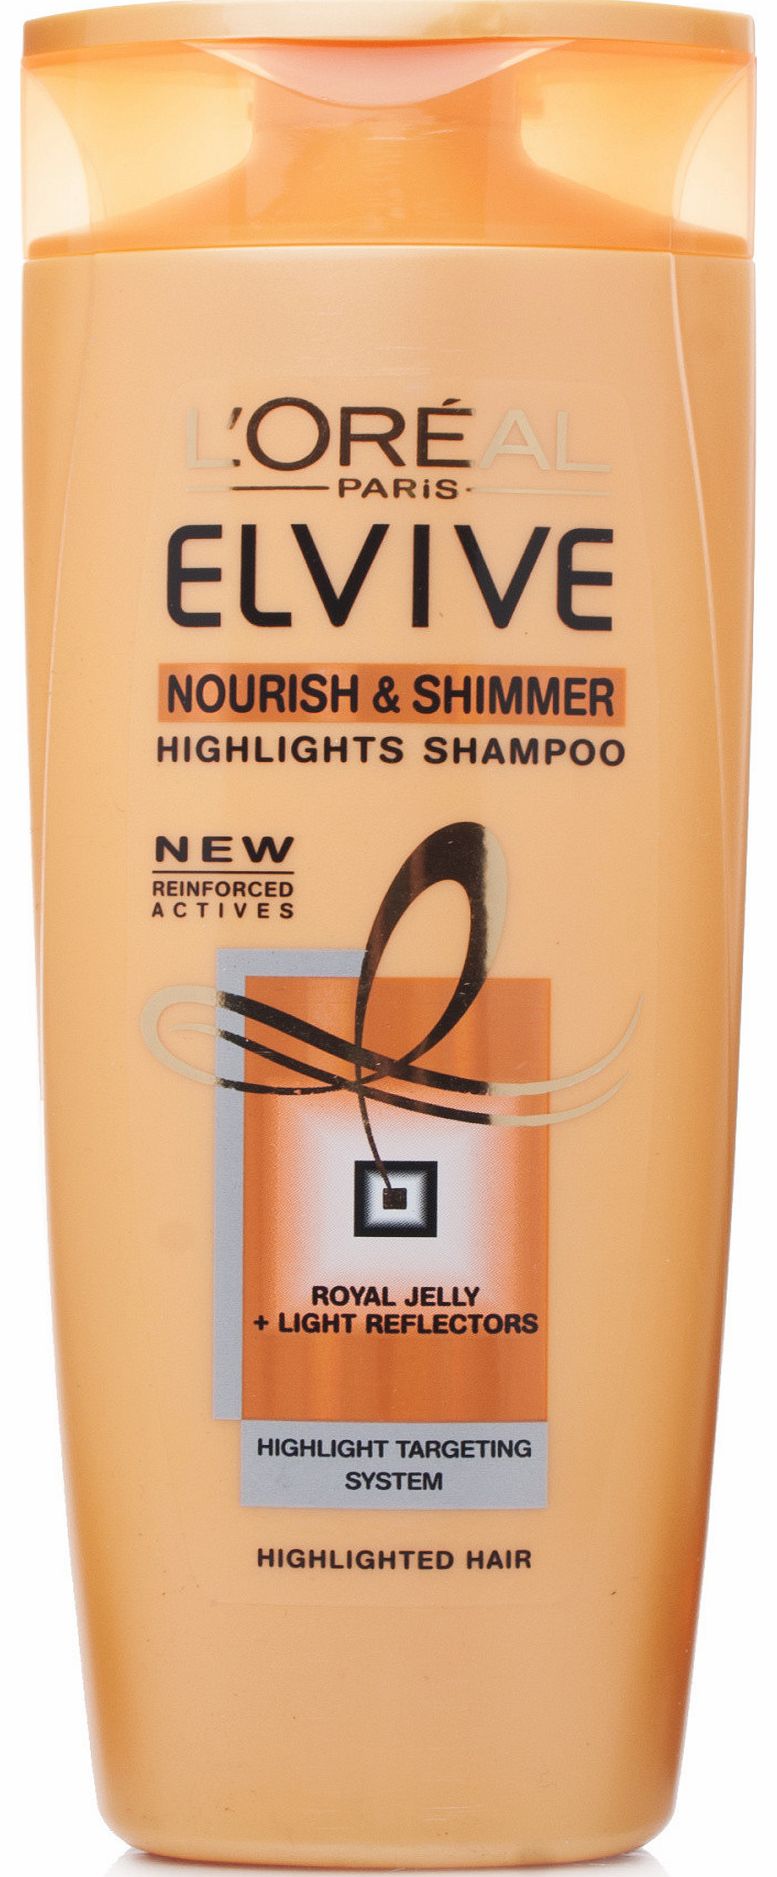 L'Oreal Elvive Nourish & Shimmer Highlights